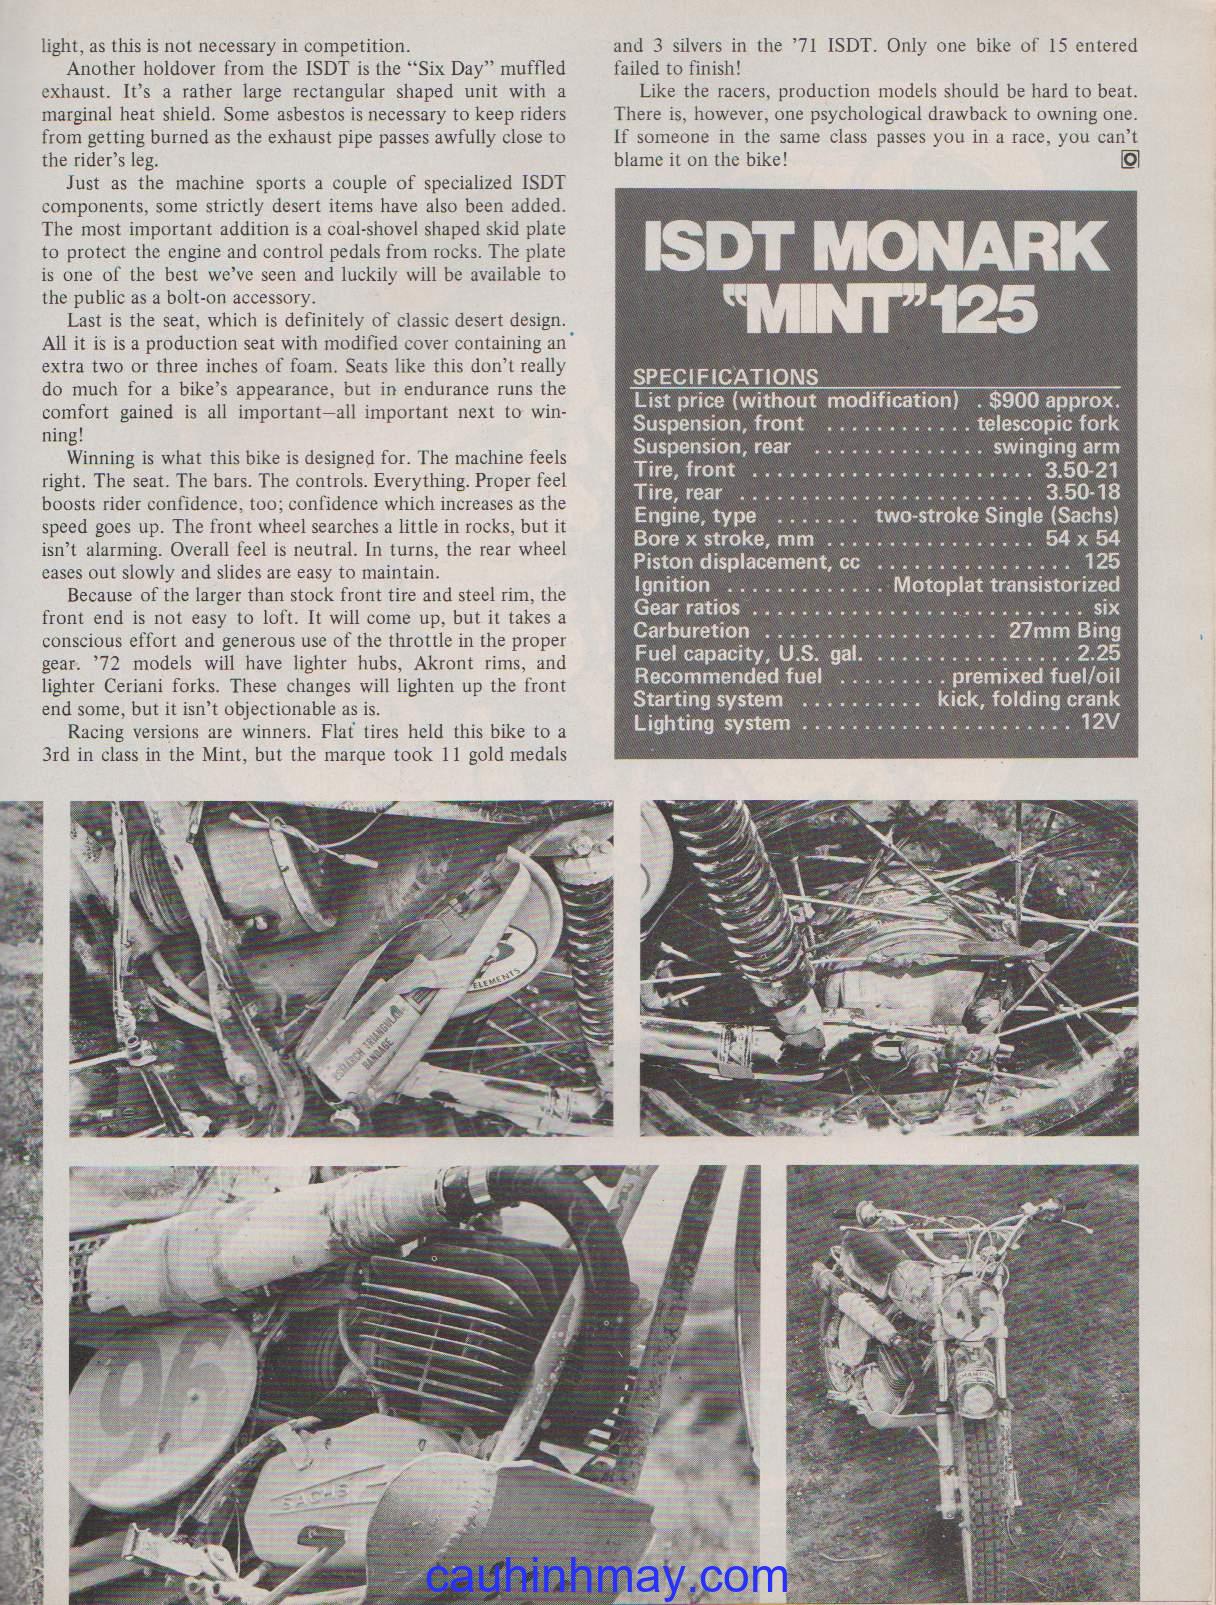 ISDT MONARK MINT 125 - cauhinhmay.com